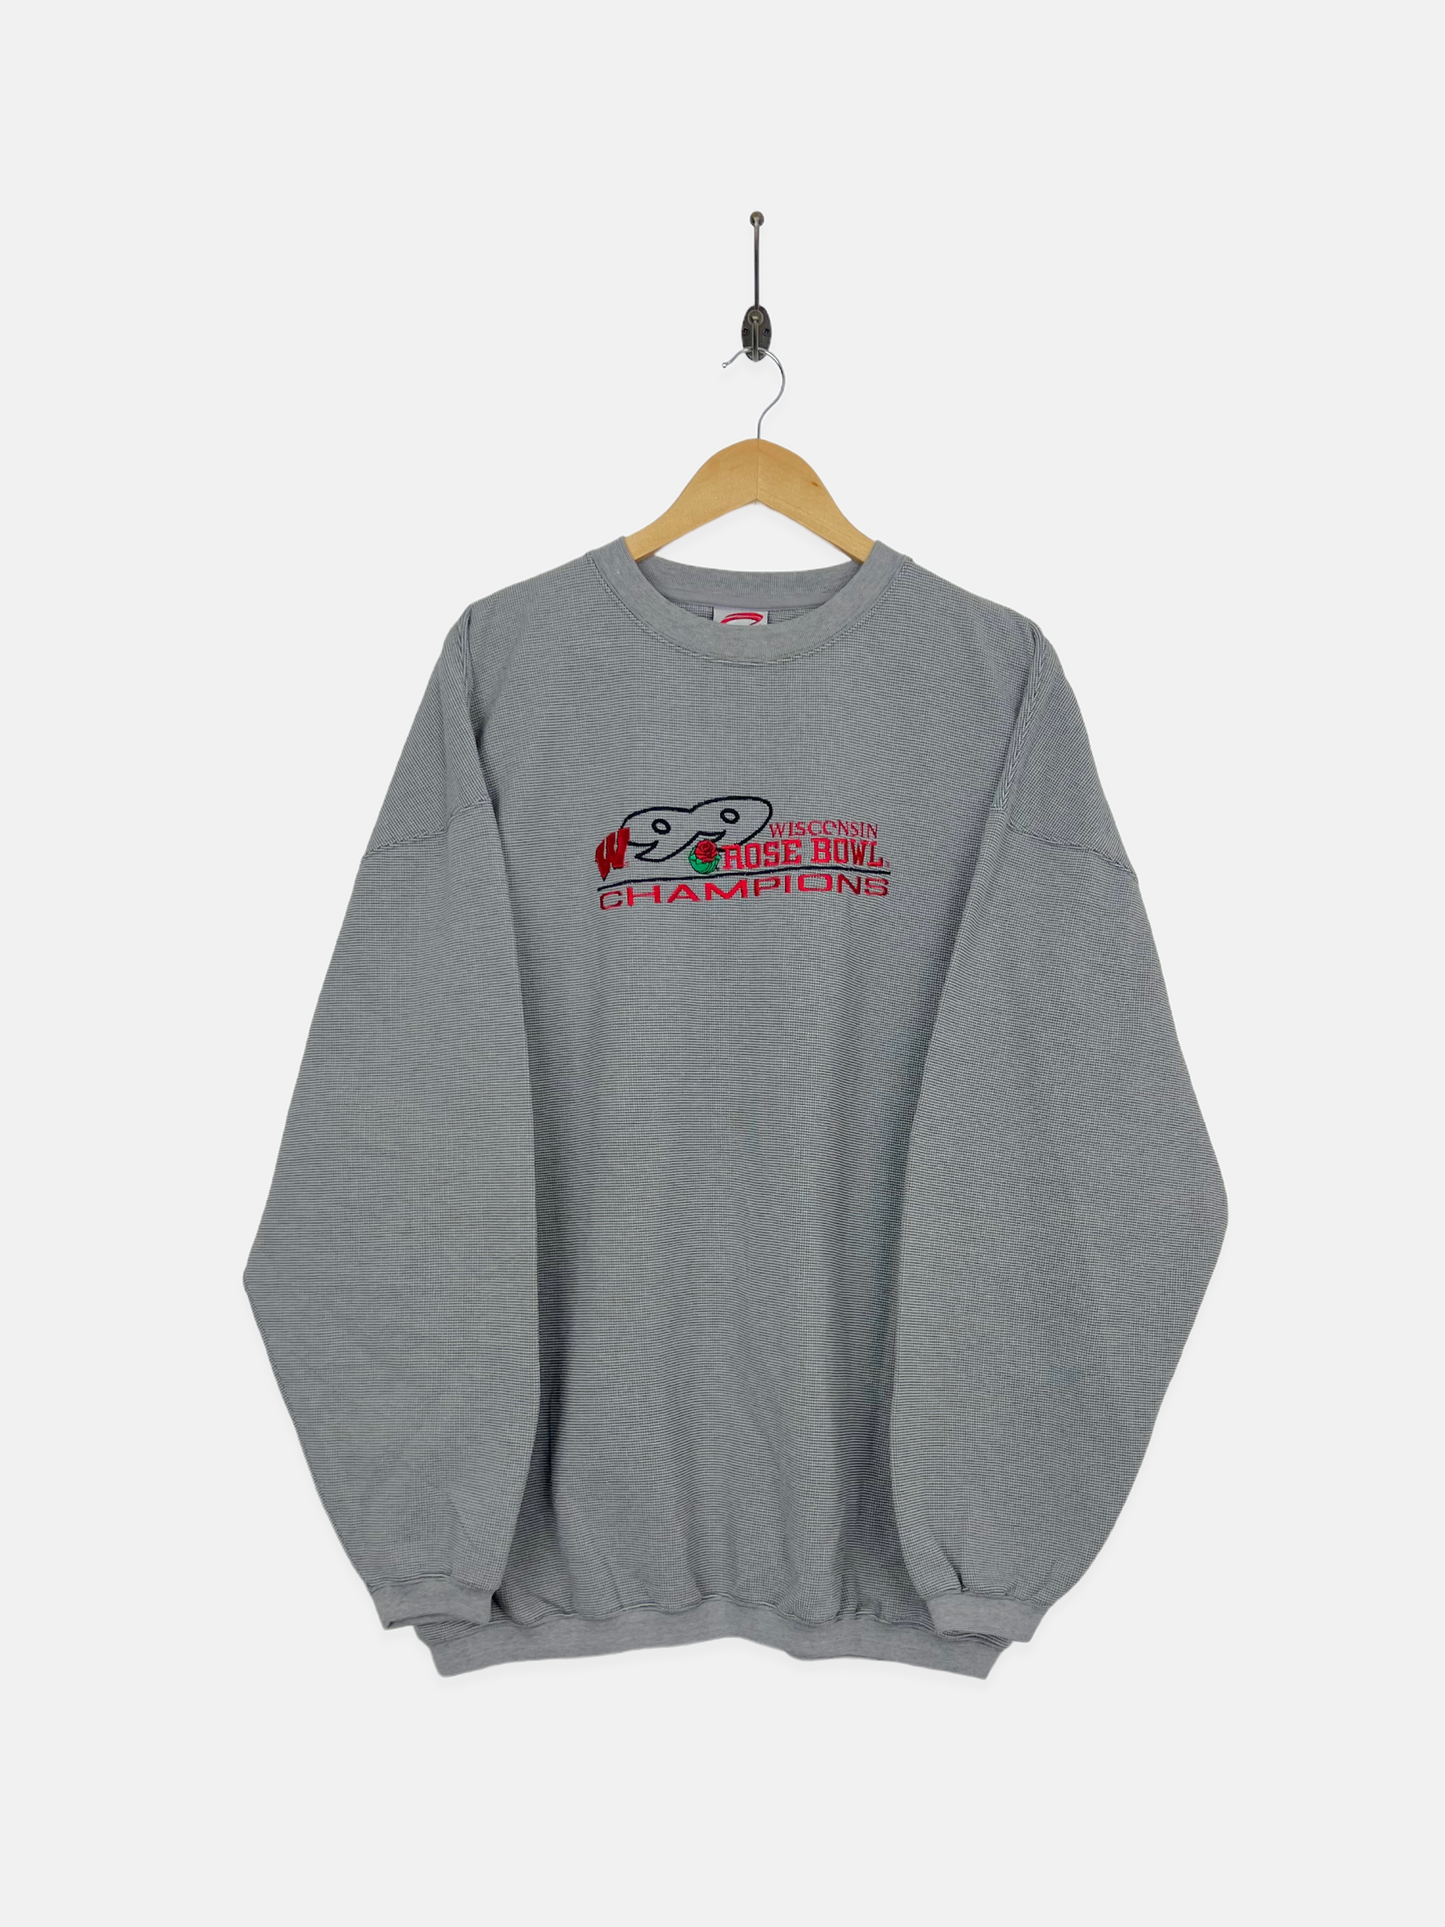 1999 Wisconsin Badgers Embroidered Vintage Sweatshirt Size 2XL